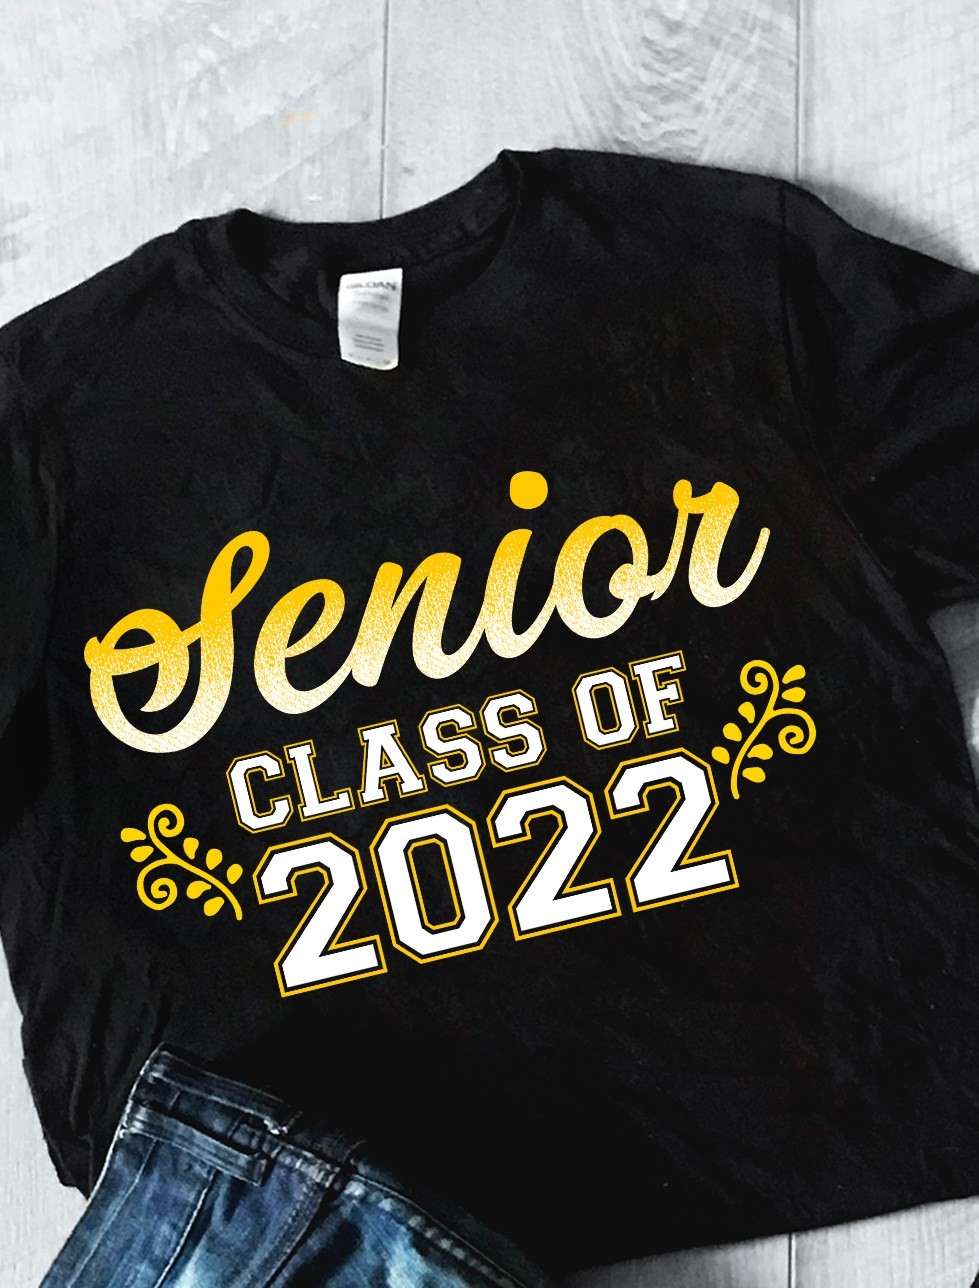 Senior class of 2022, Back to school